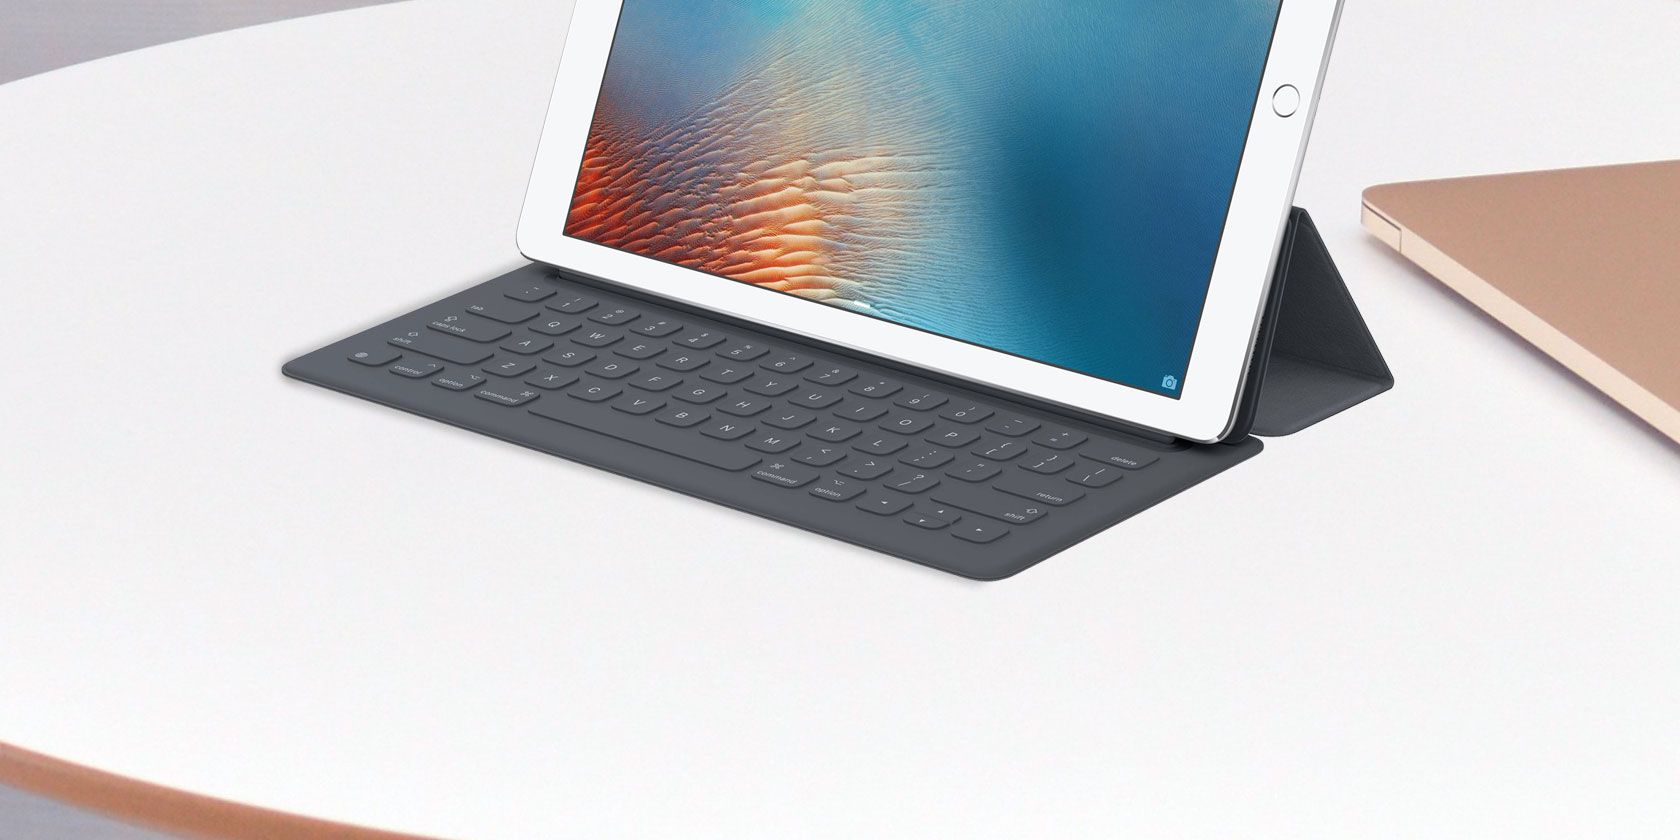 iPad Pro with smart keyboard folio